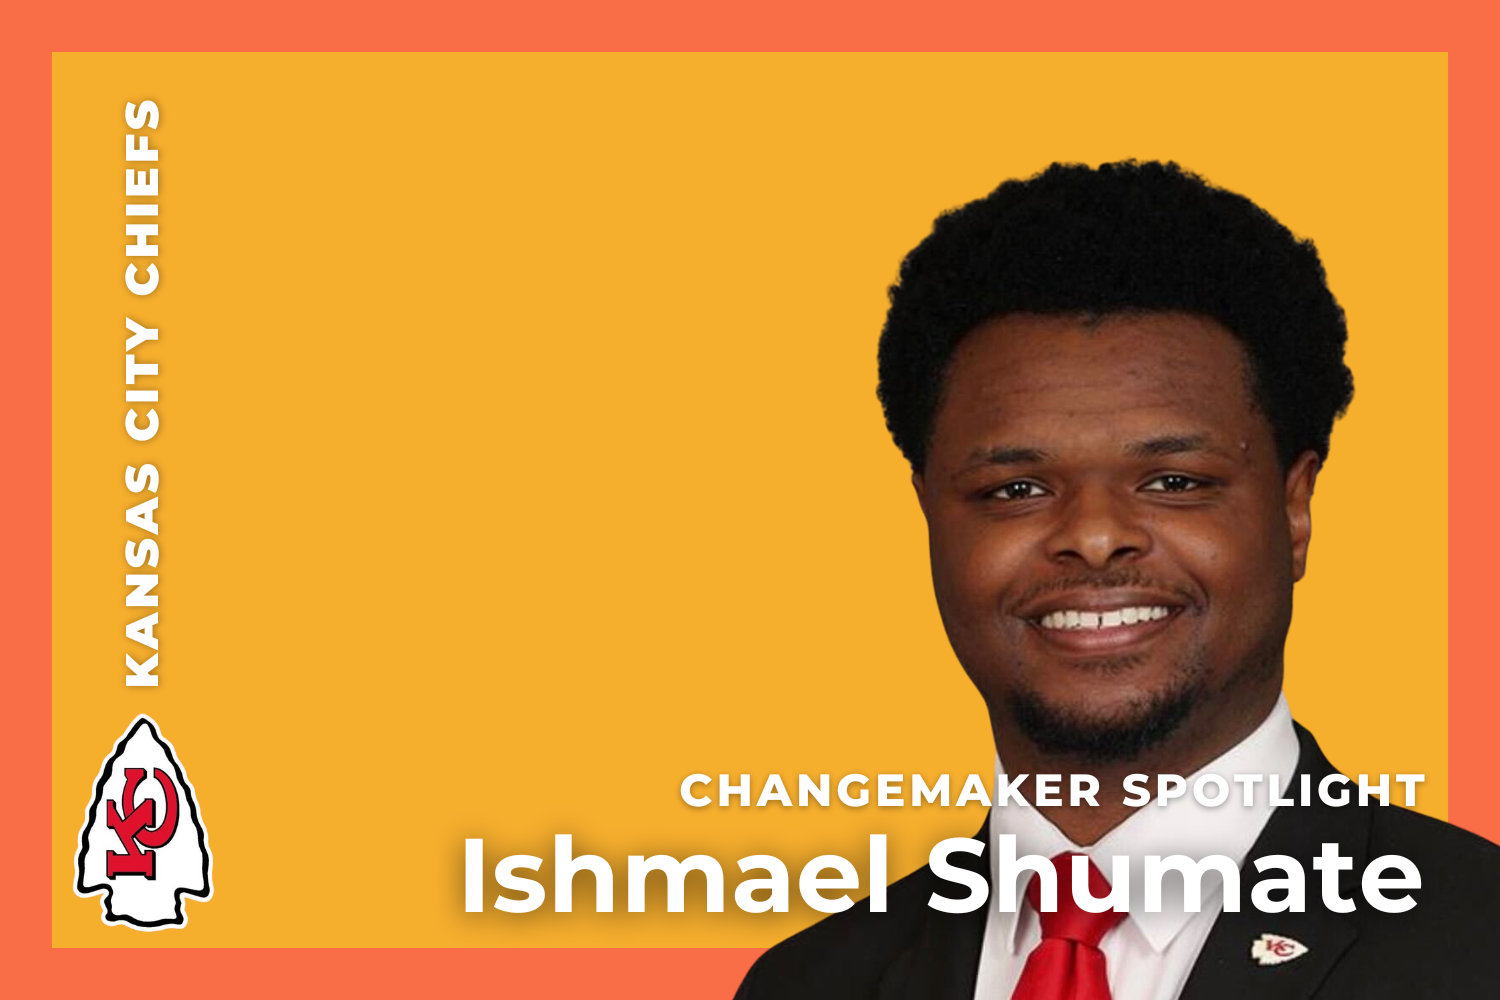 Ishmael Shumate Changemaker Highlight FI